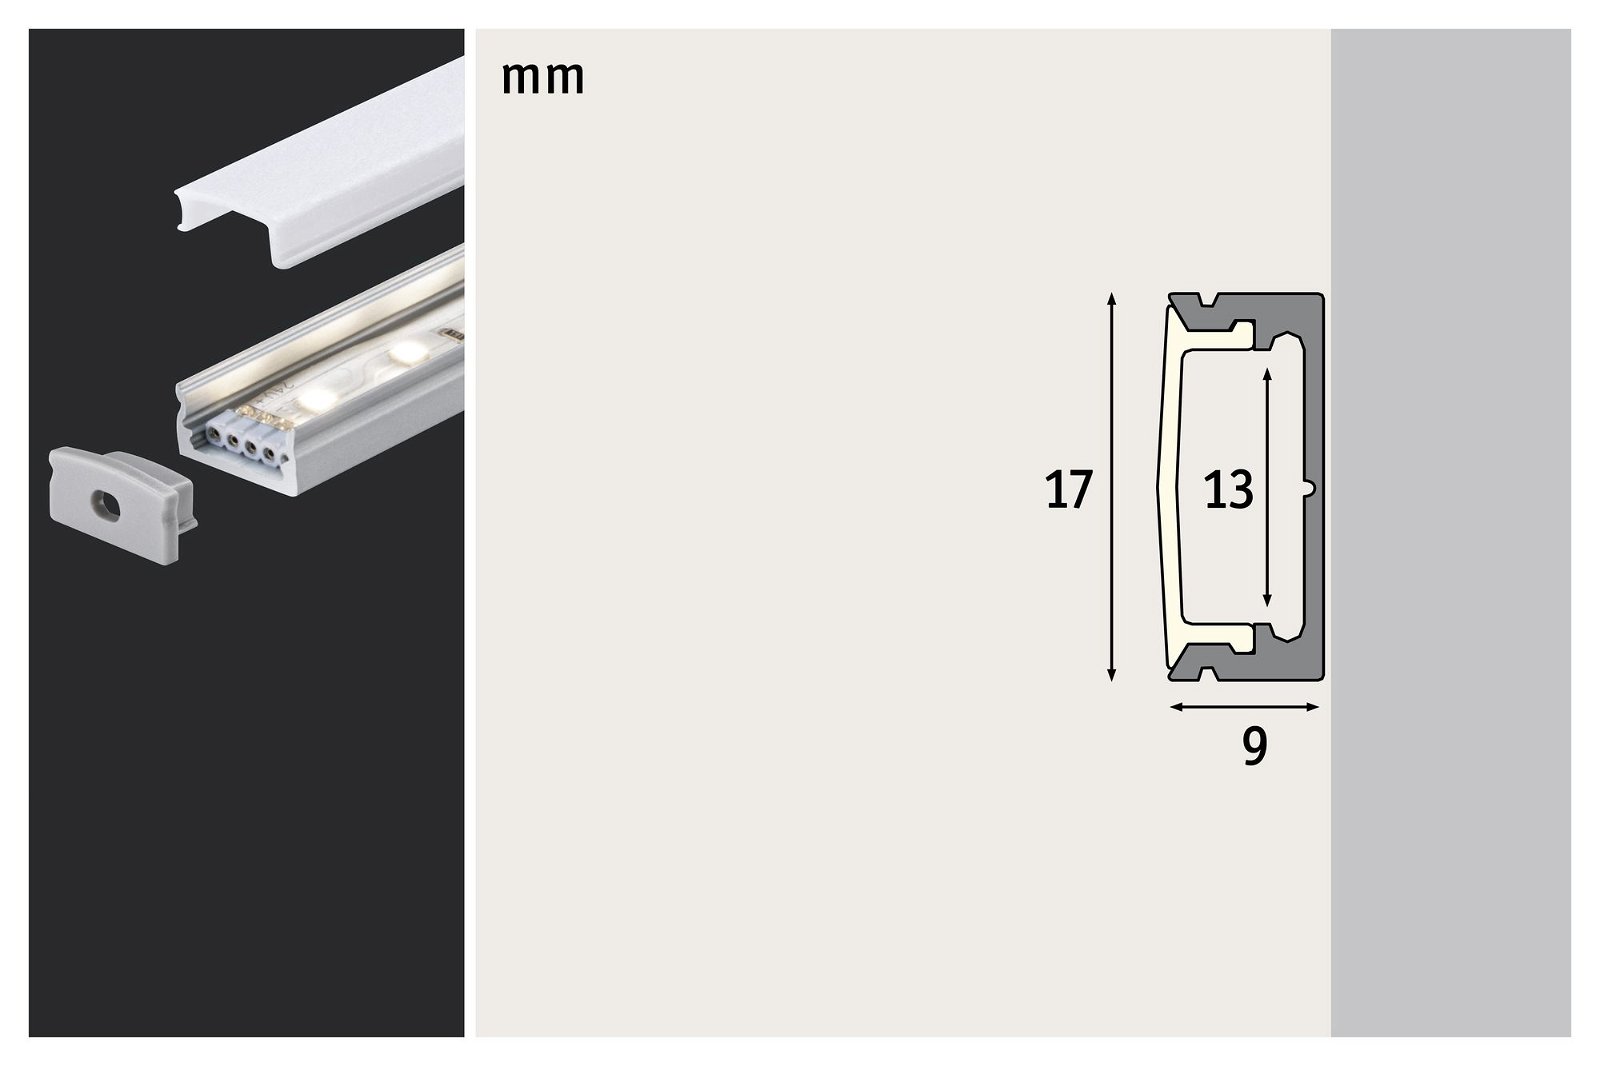 LED Strip profile Base White diffuser 2m Anodised aluminium/Satin